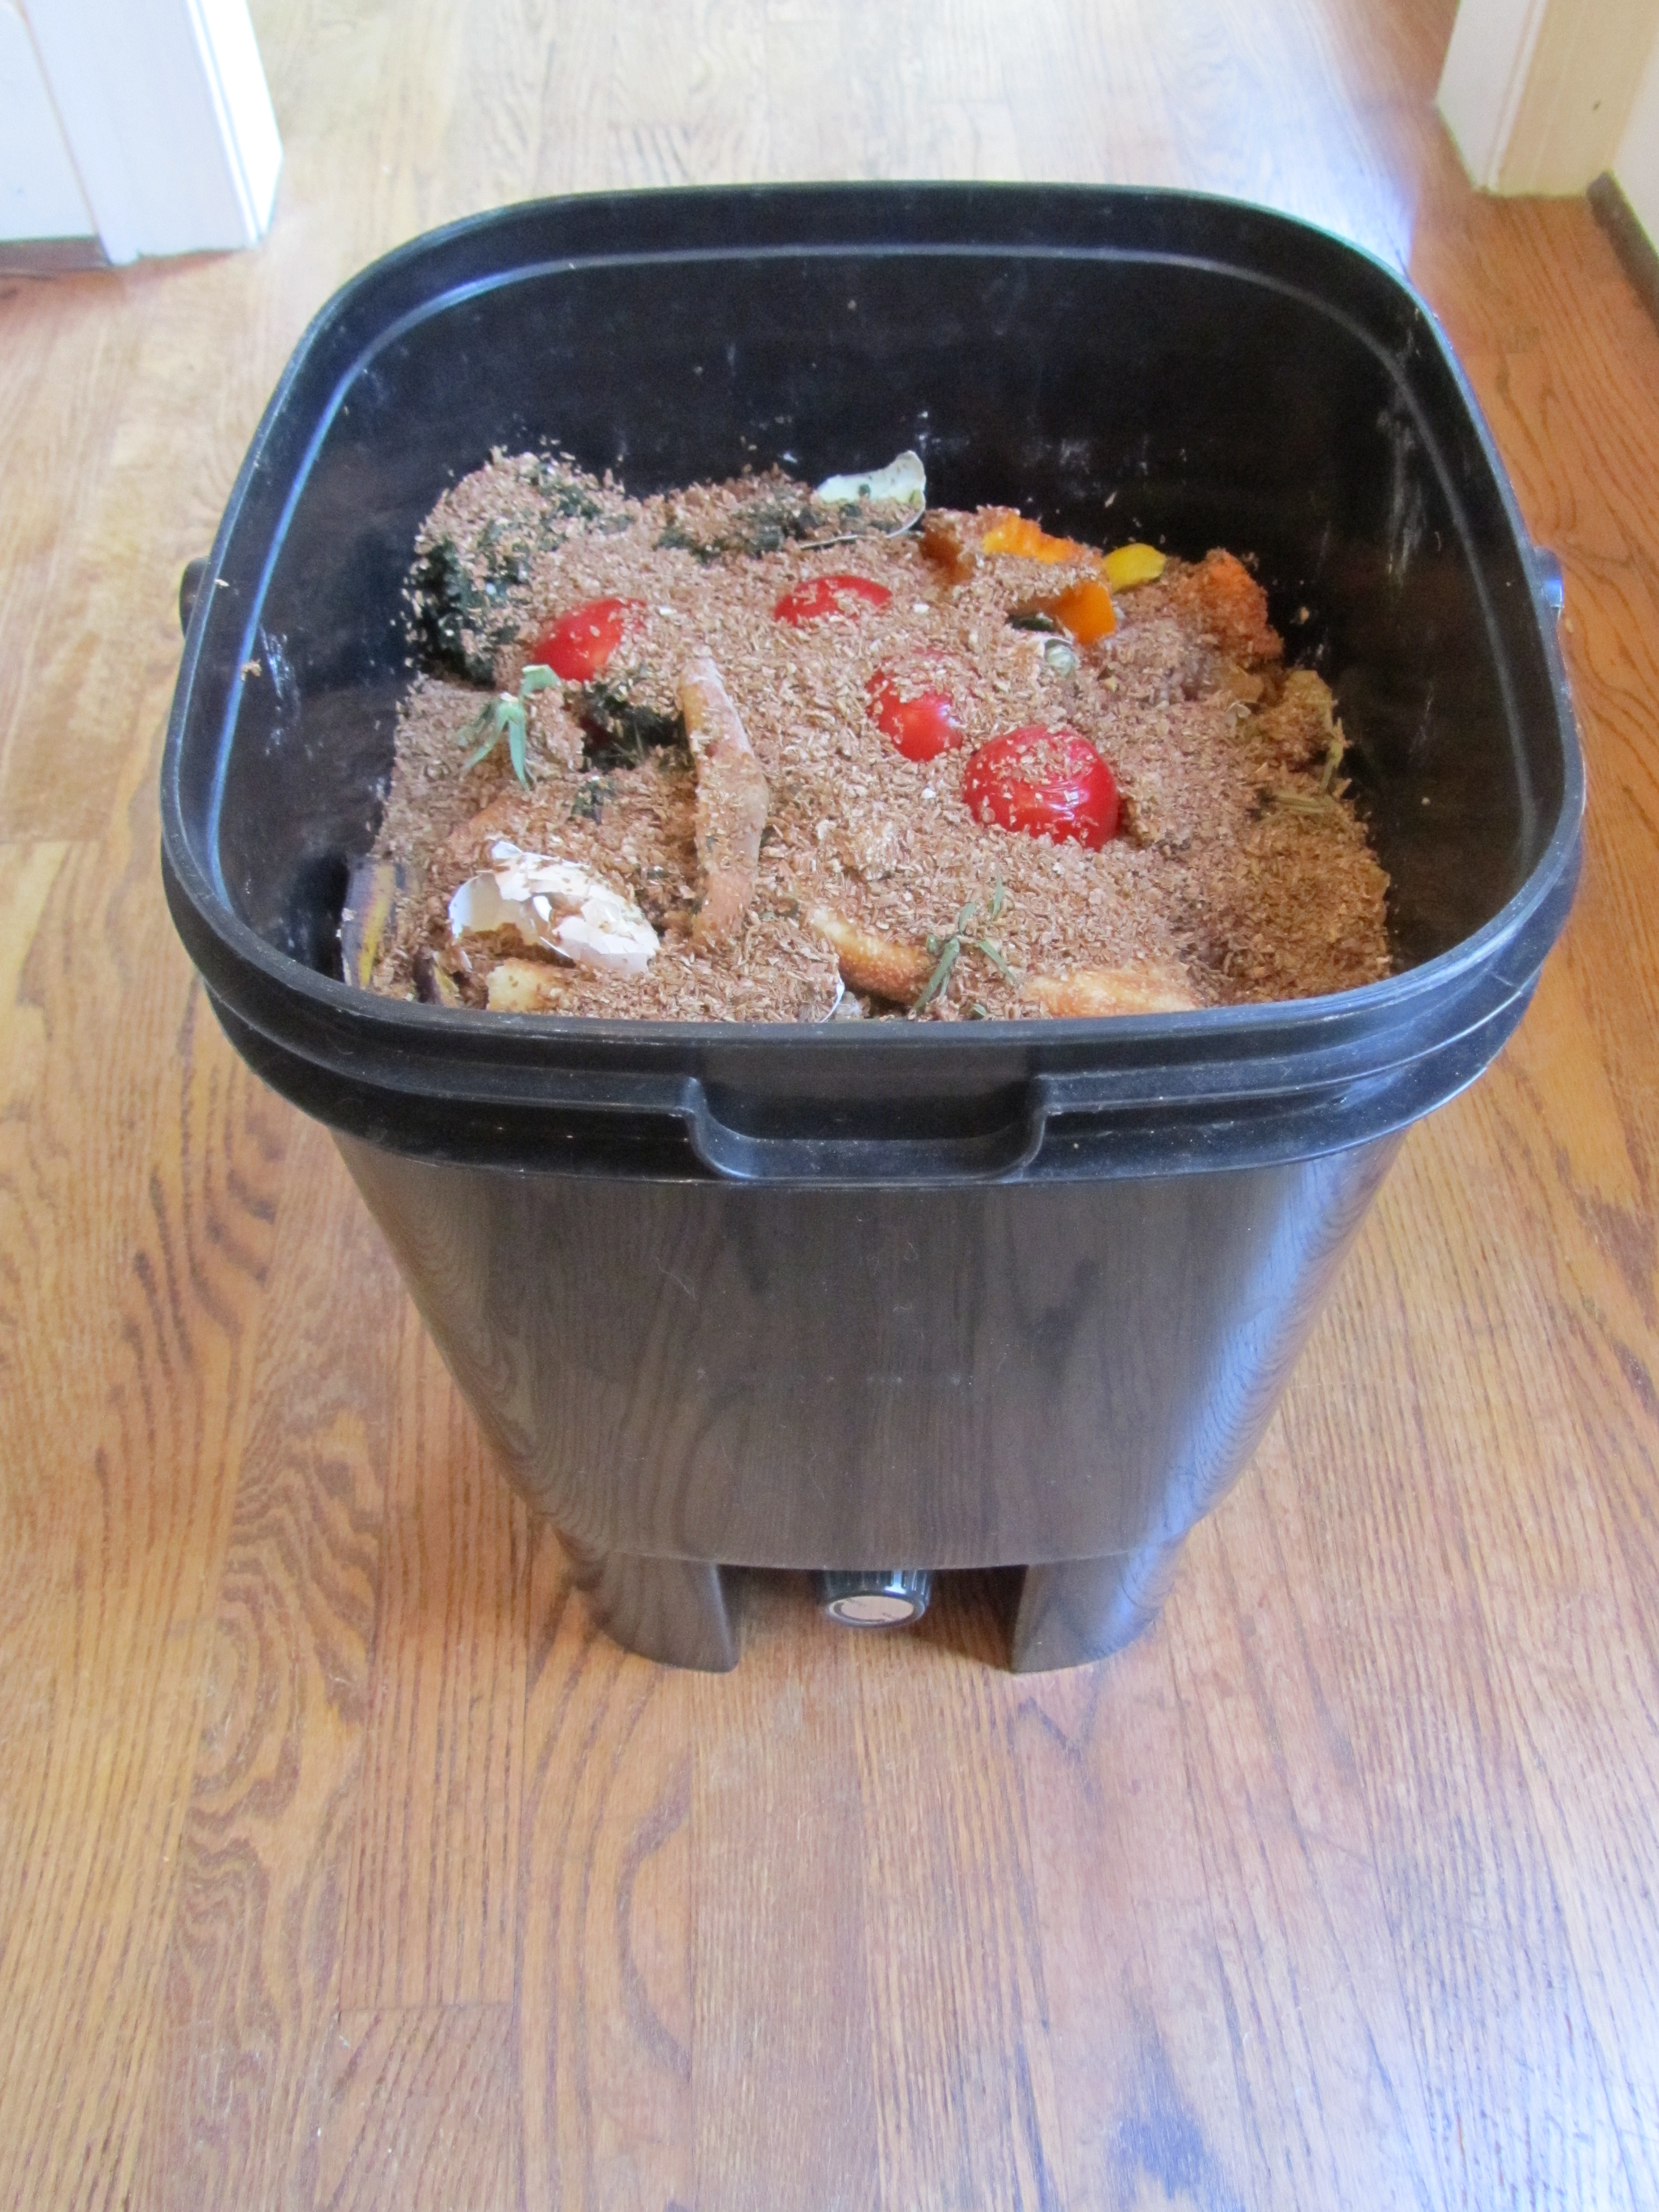 What is Bokashi Composting?